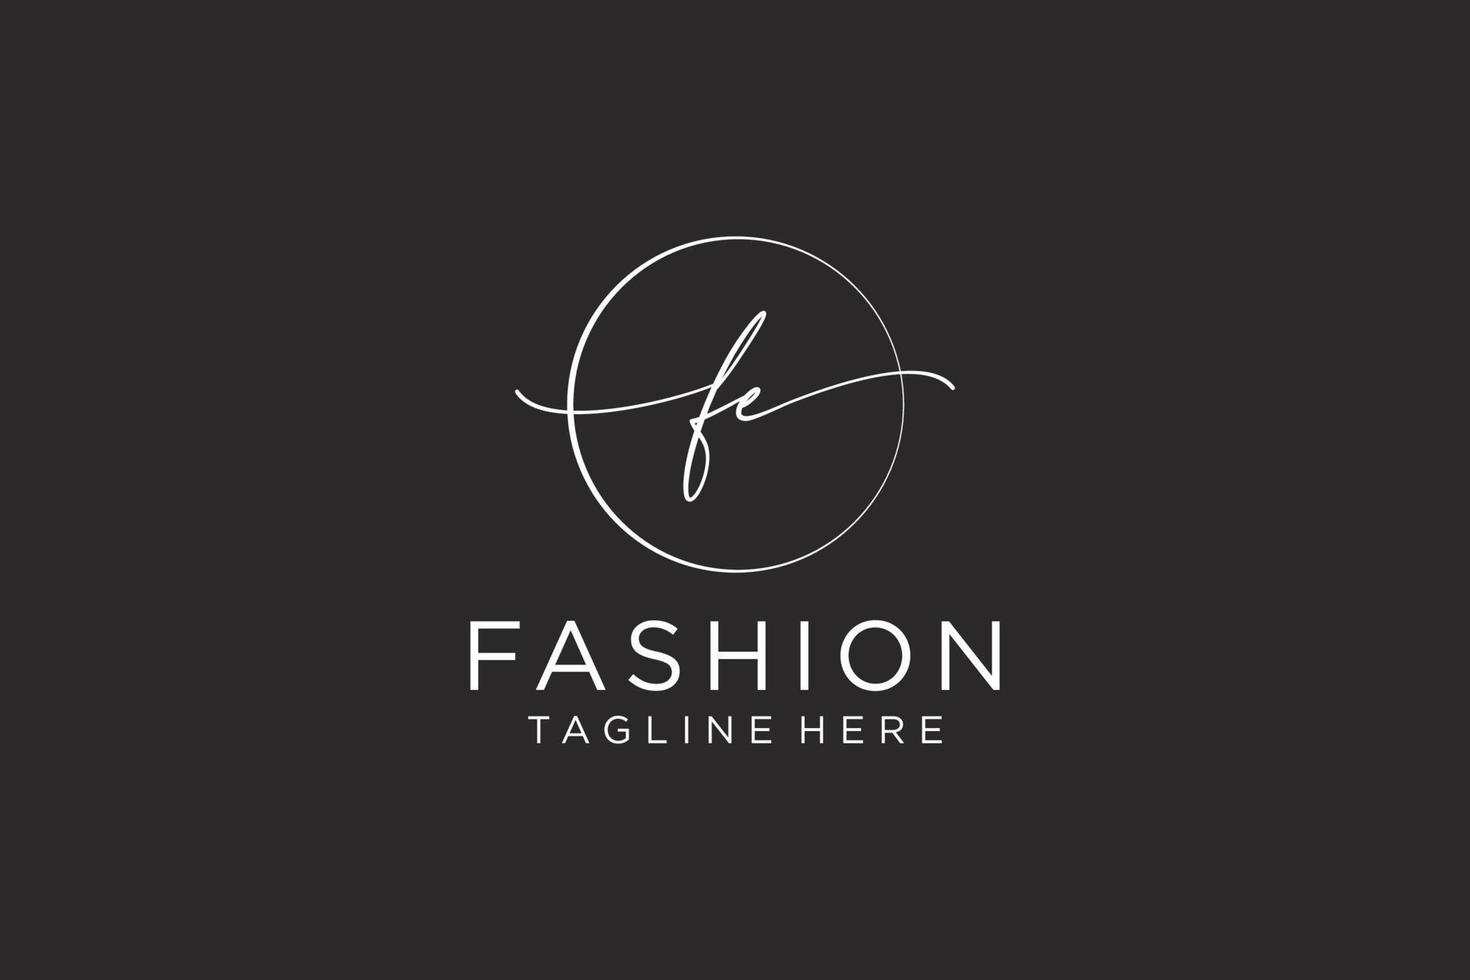 initial FE Feminine logo beauty monogram and elegant logo design, handwriting logo of initial signature, wedding, fashion, floral and botanical with creative template. vector